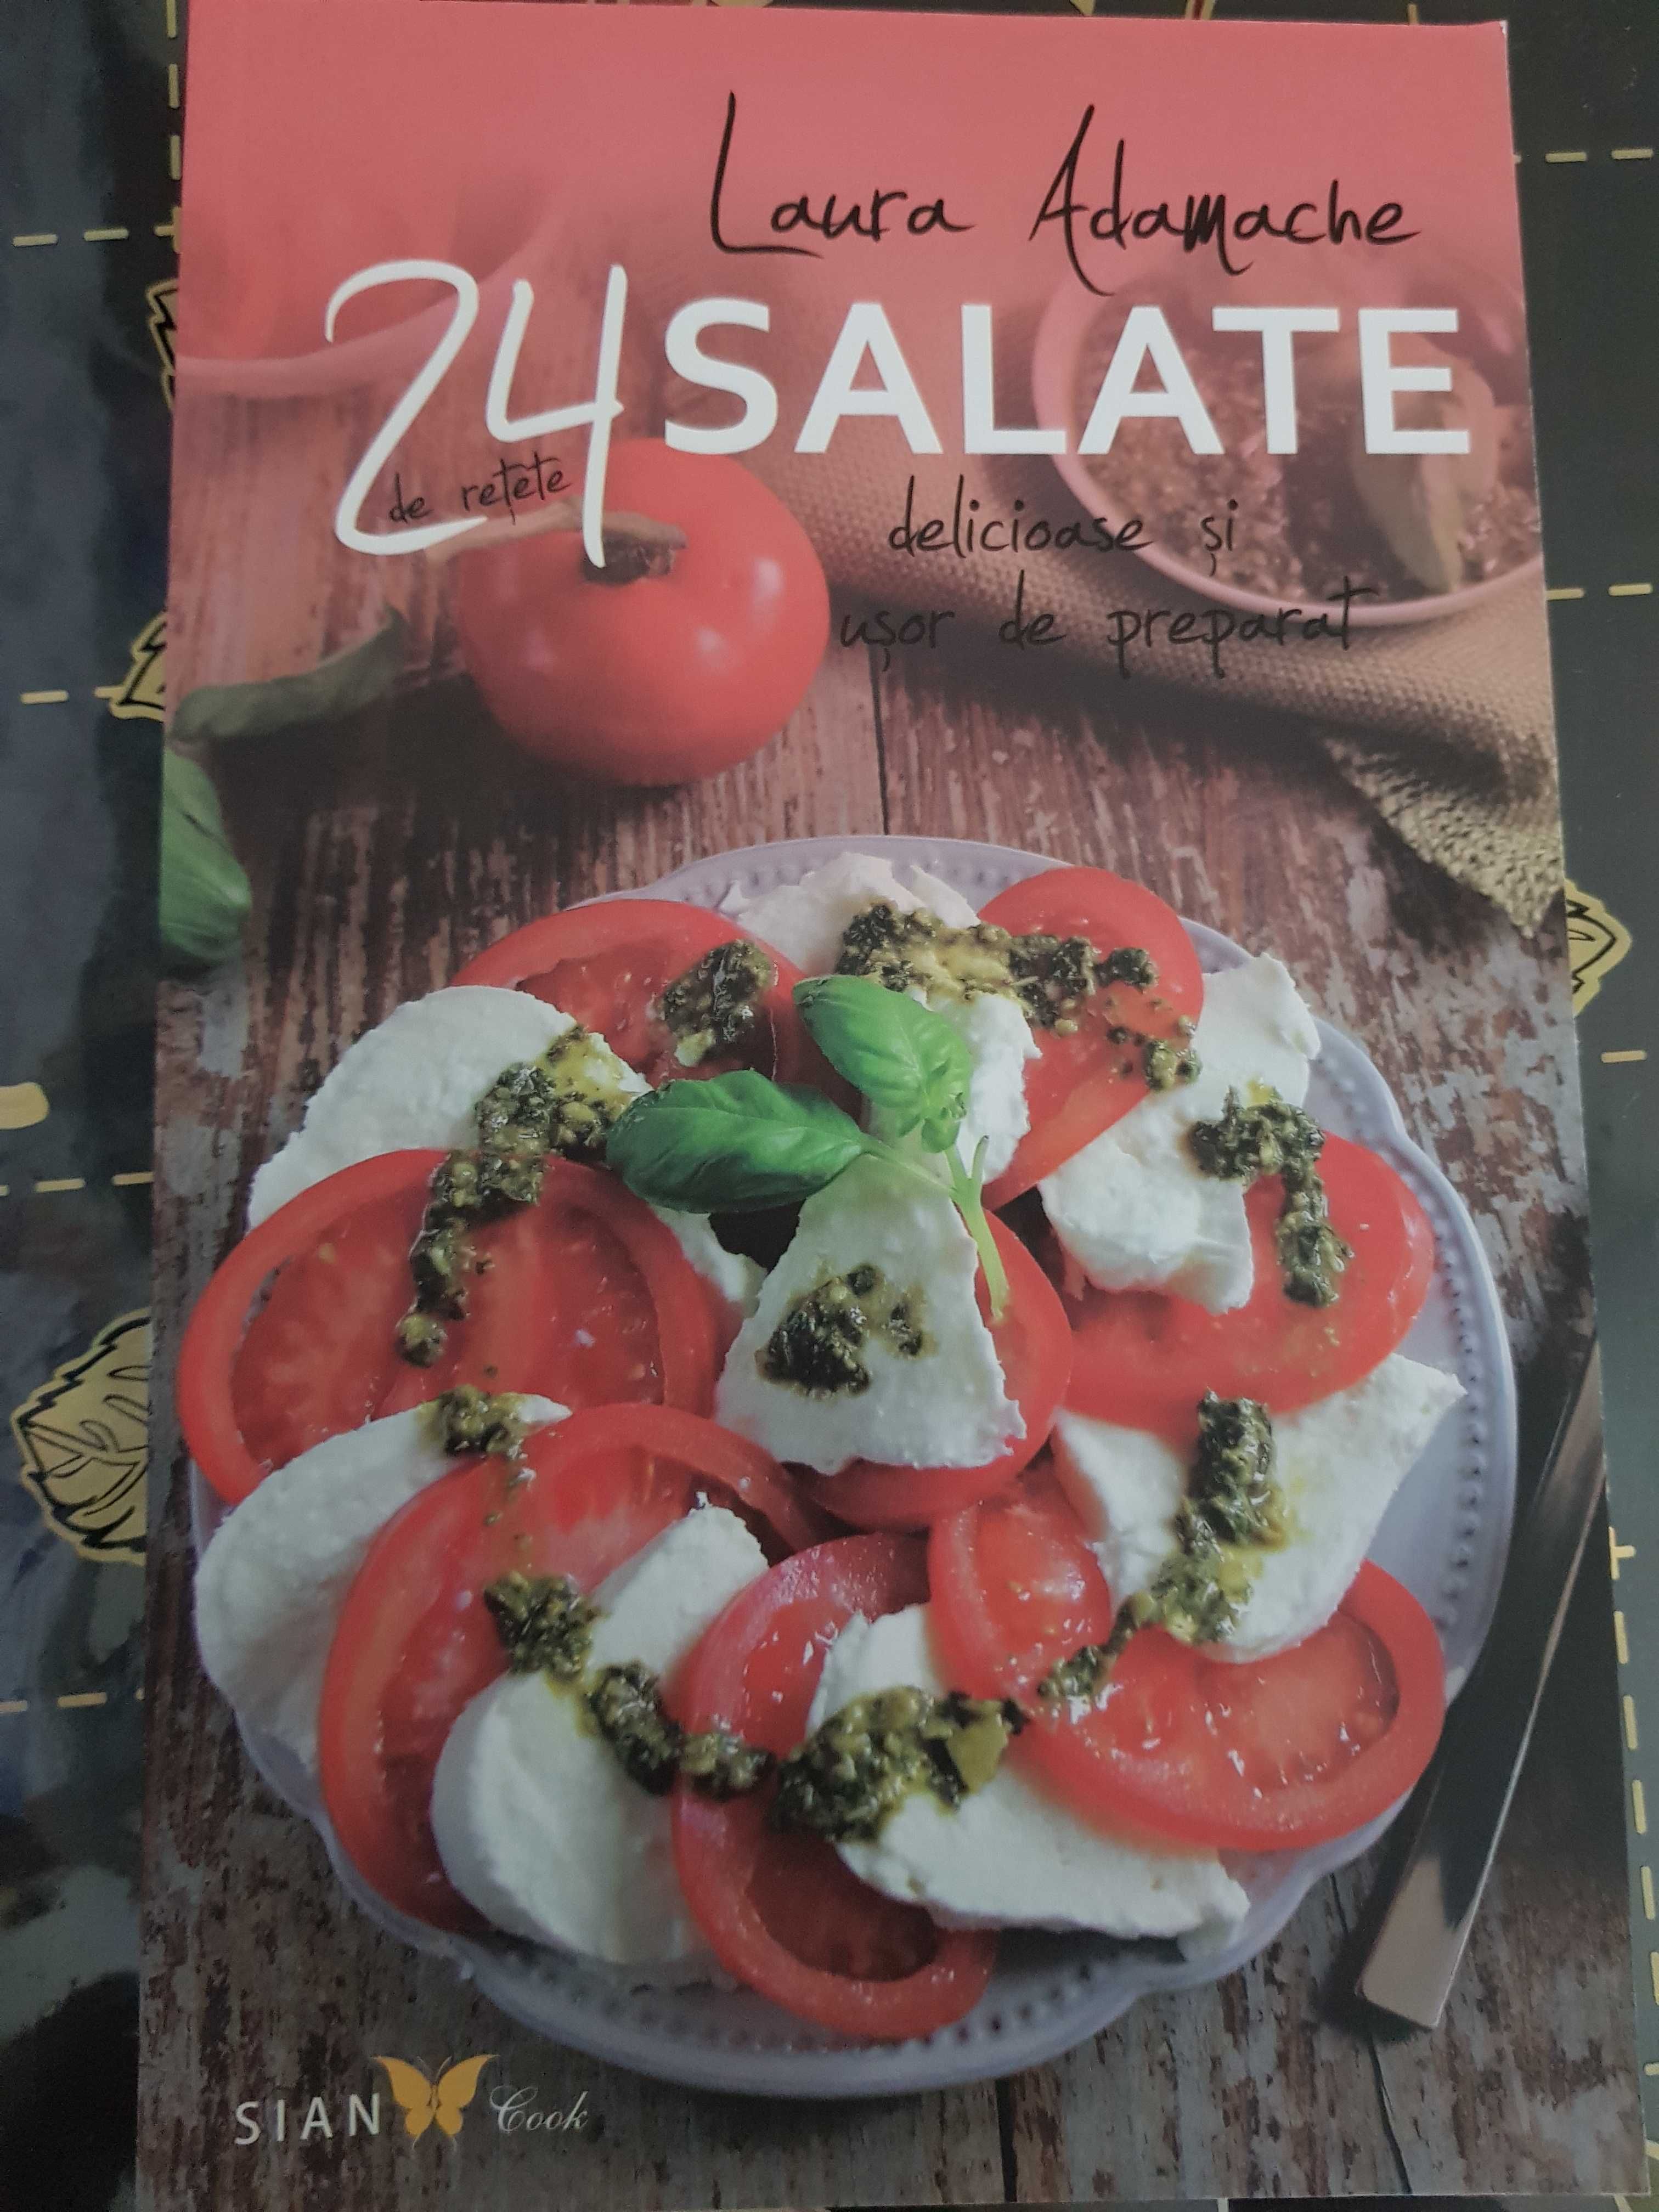 24 salate - Laura Adamache